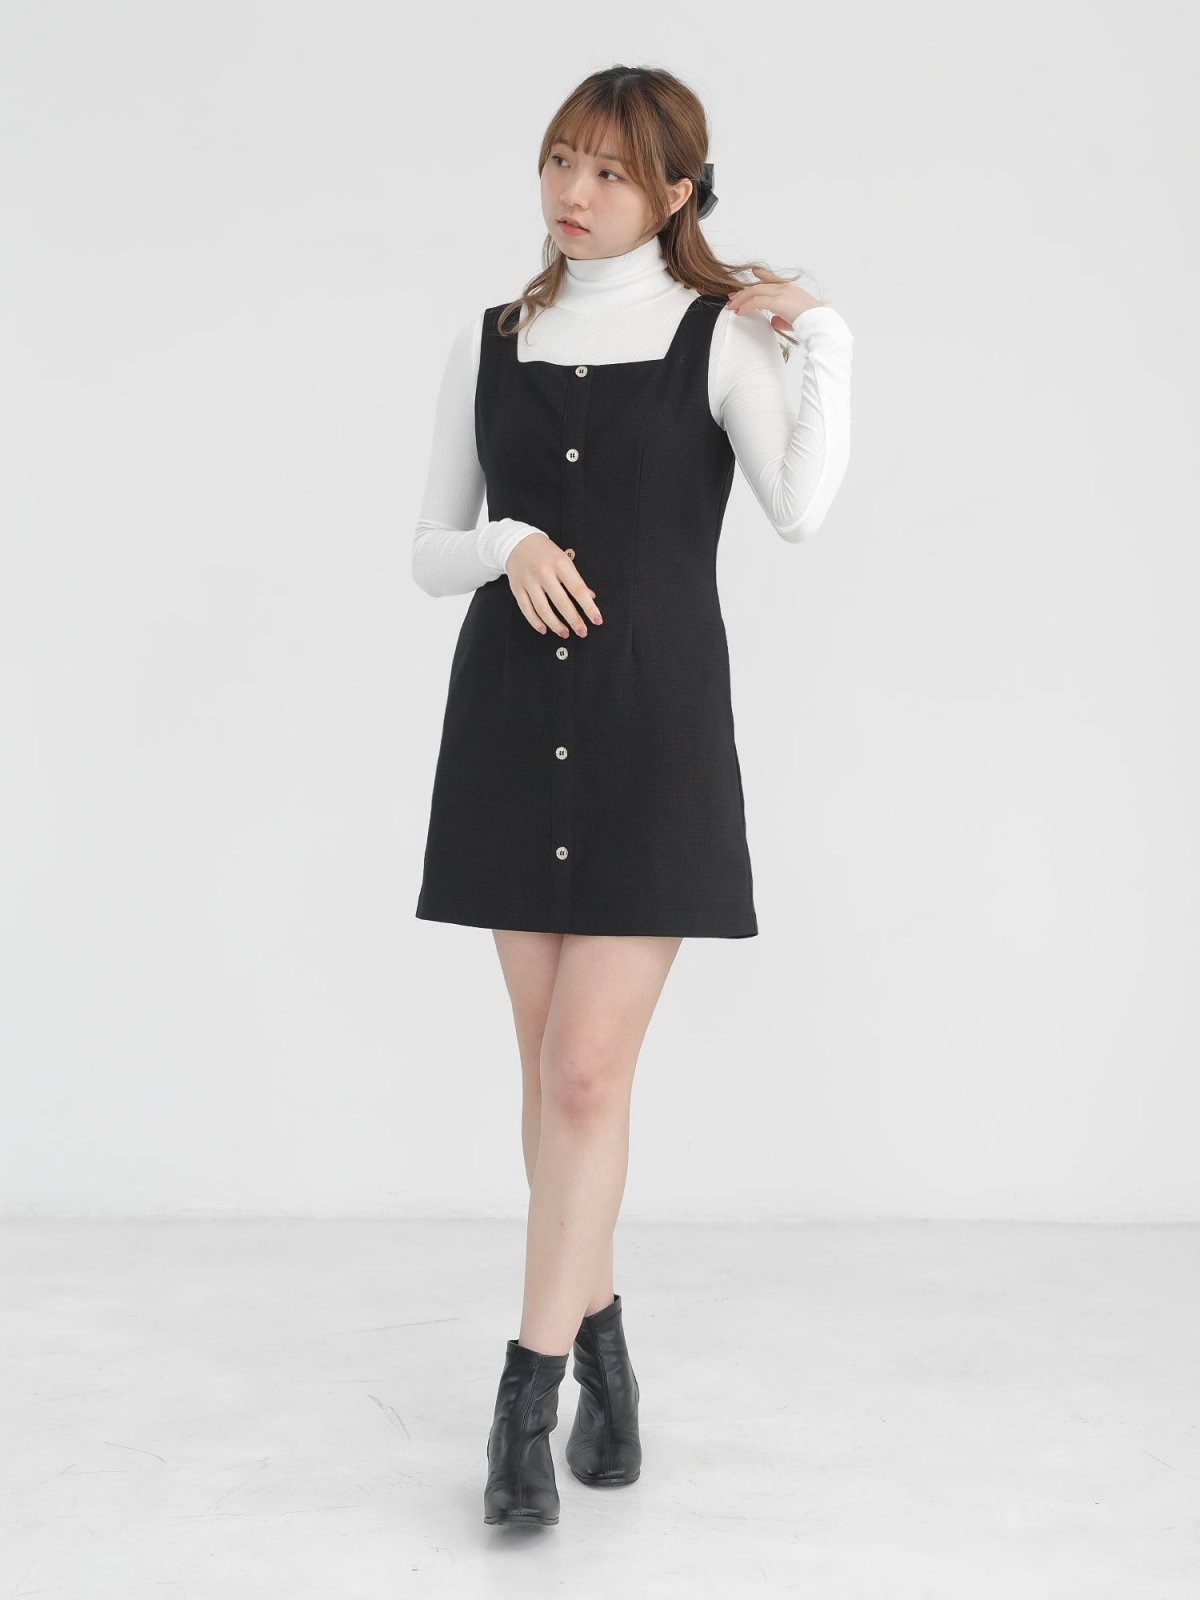 Finley Slim Fit Tweed Dress - DAG-DD1319-23BlackS - Black - S - D'zage Designs